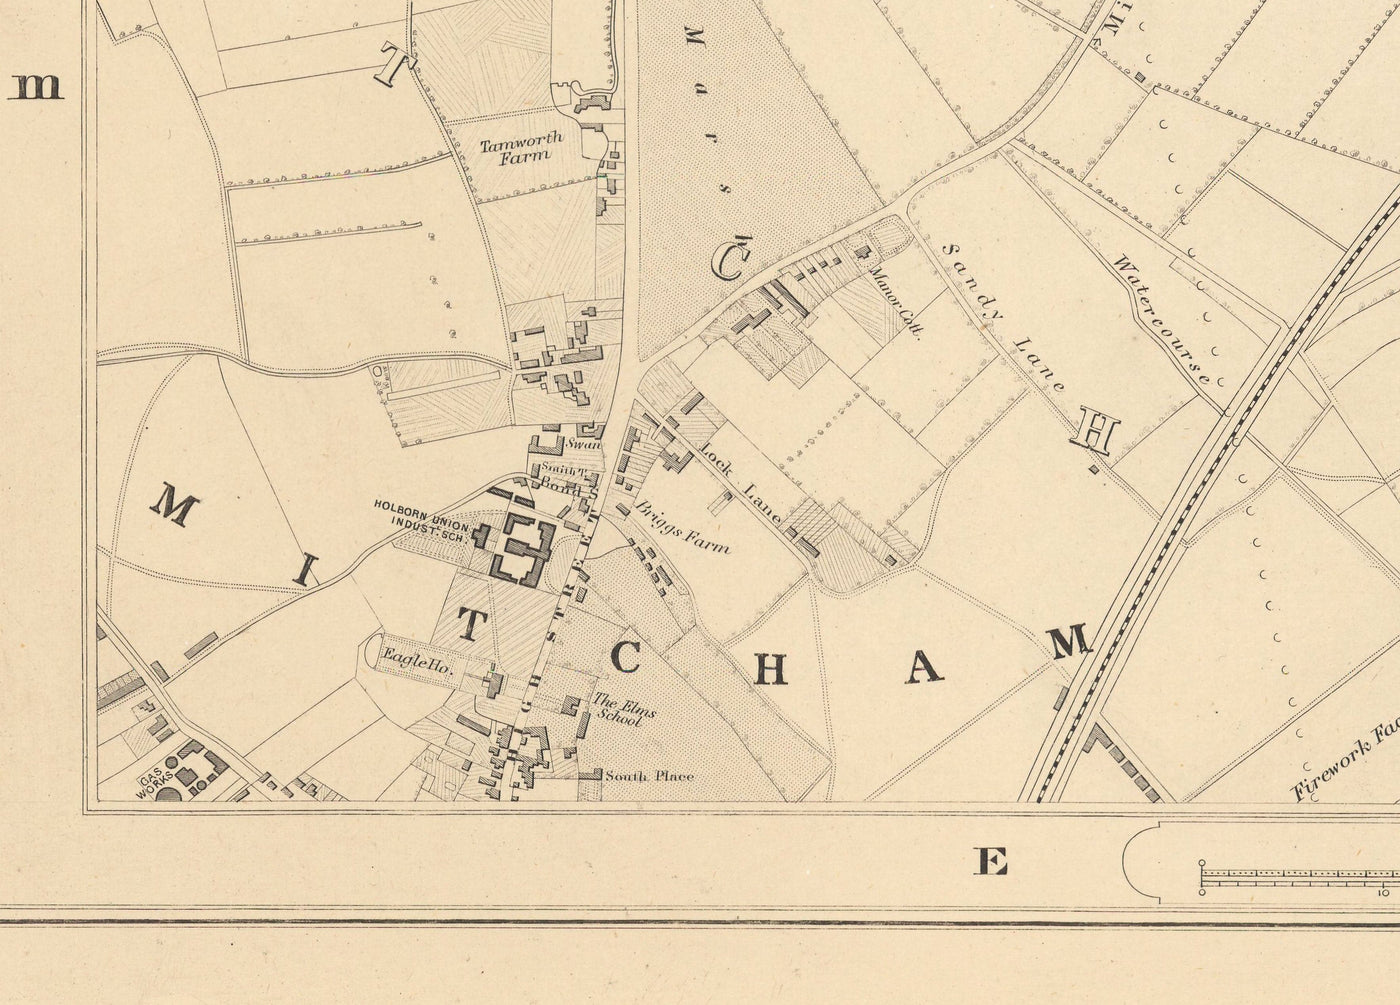 Ancienne carte de Sud London en 1862 par Edward Stanford - Streatham, Tooting, Mitcham, Norbury - SW17, SW16, CR4